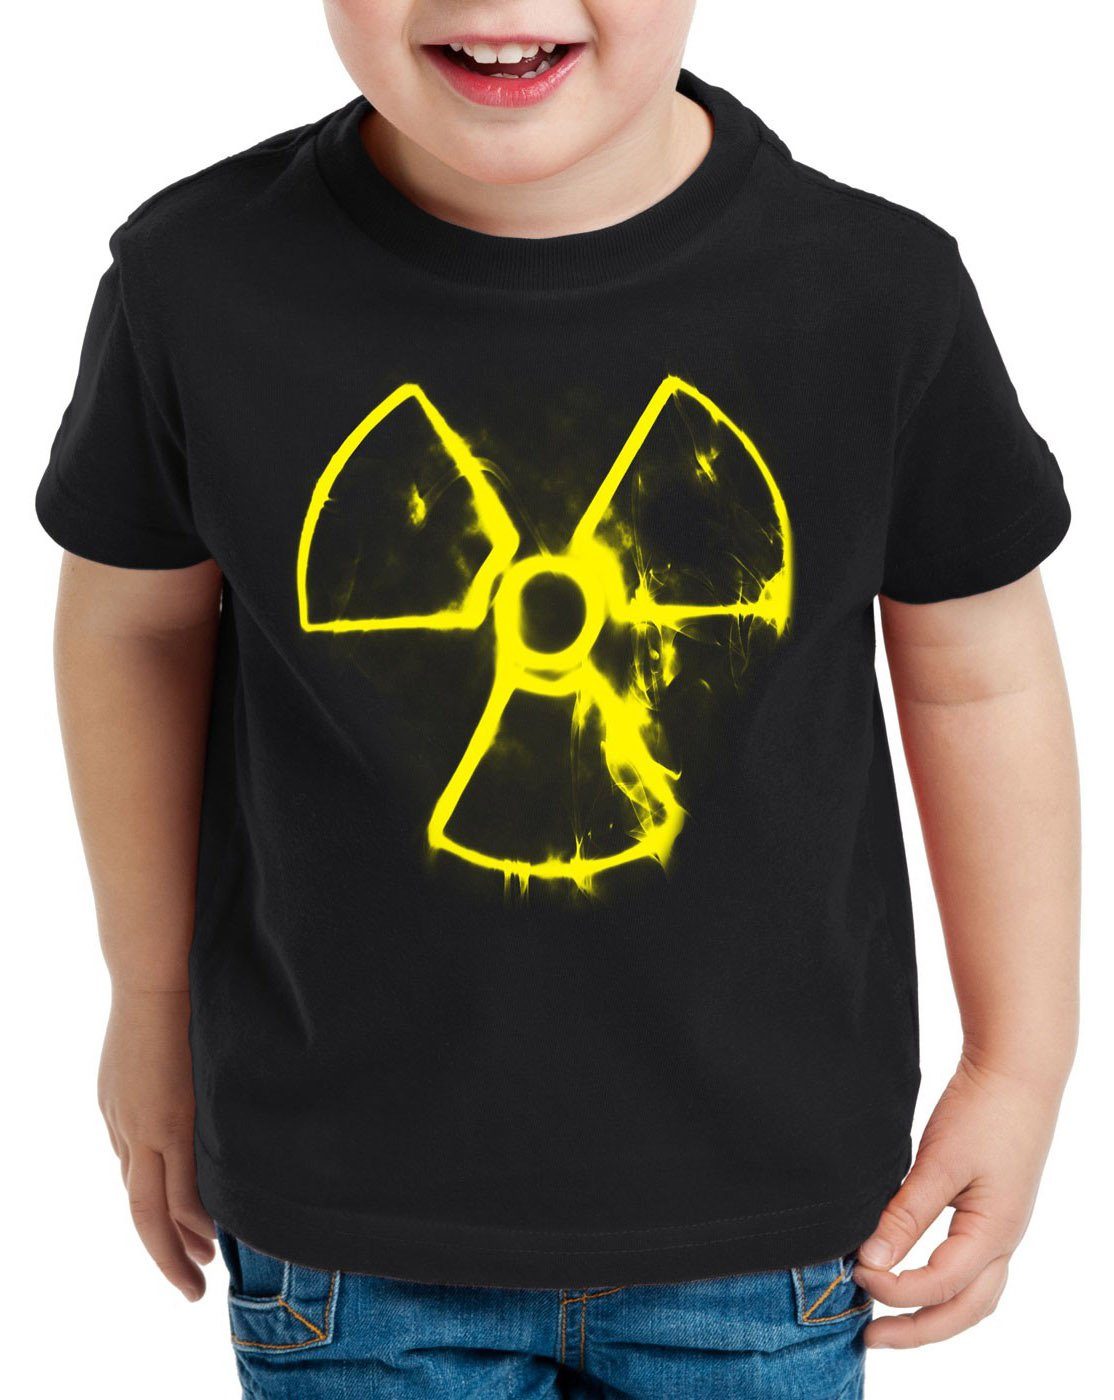 style3 Print-Shirt Kinder T-Shirt Nuclear Smoke nein danke akw atomkraft | T-Shirts